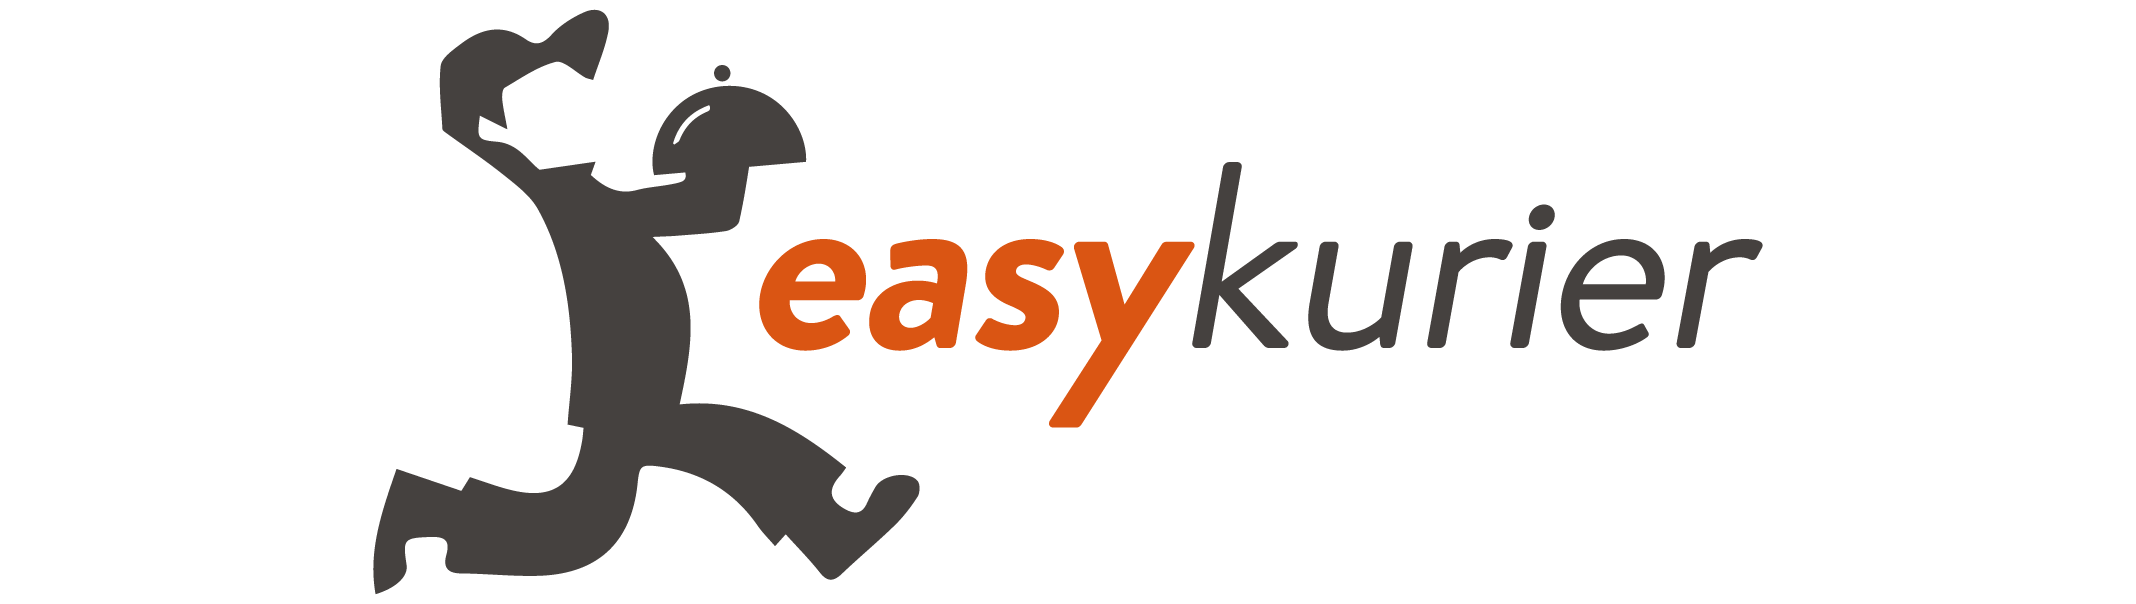 easykurier-logo-1.png